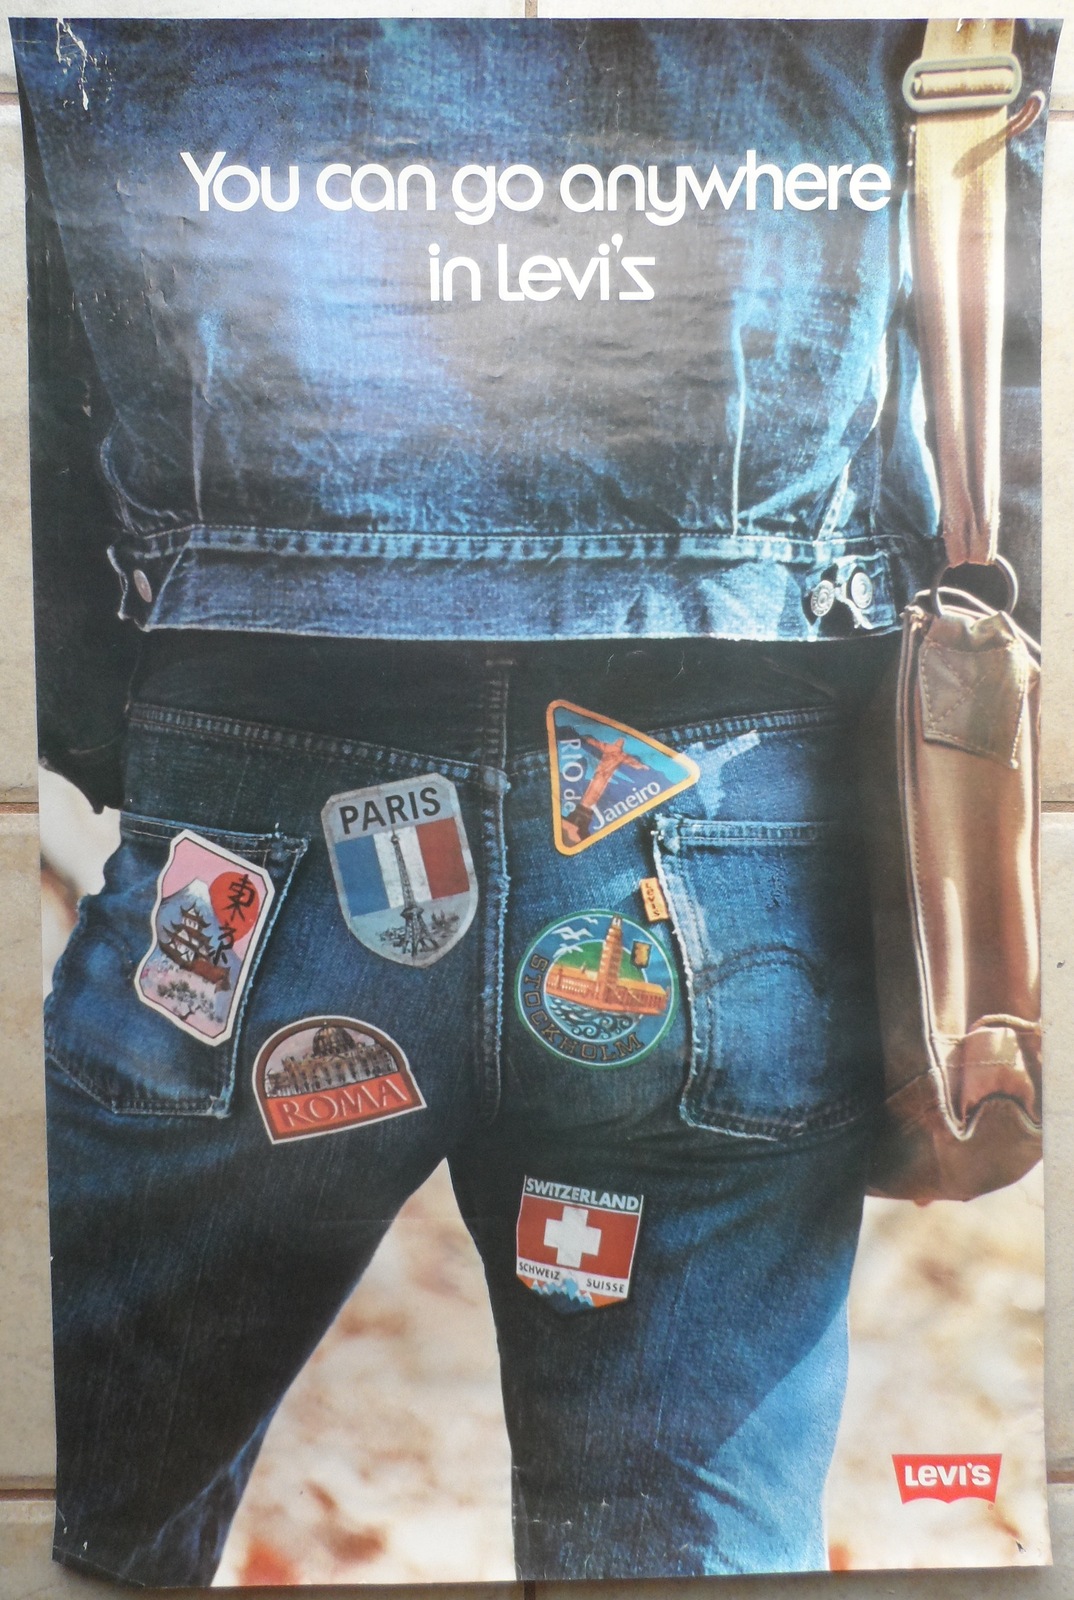 Levi's Print Ad (1980s): 1 listing